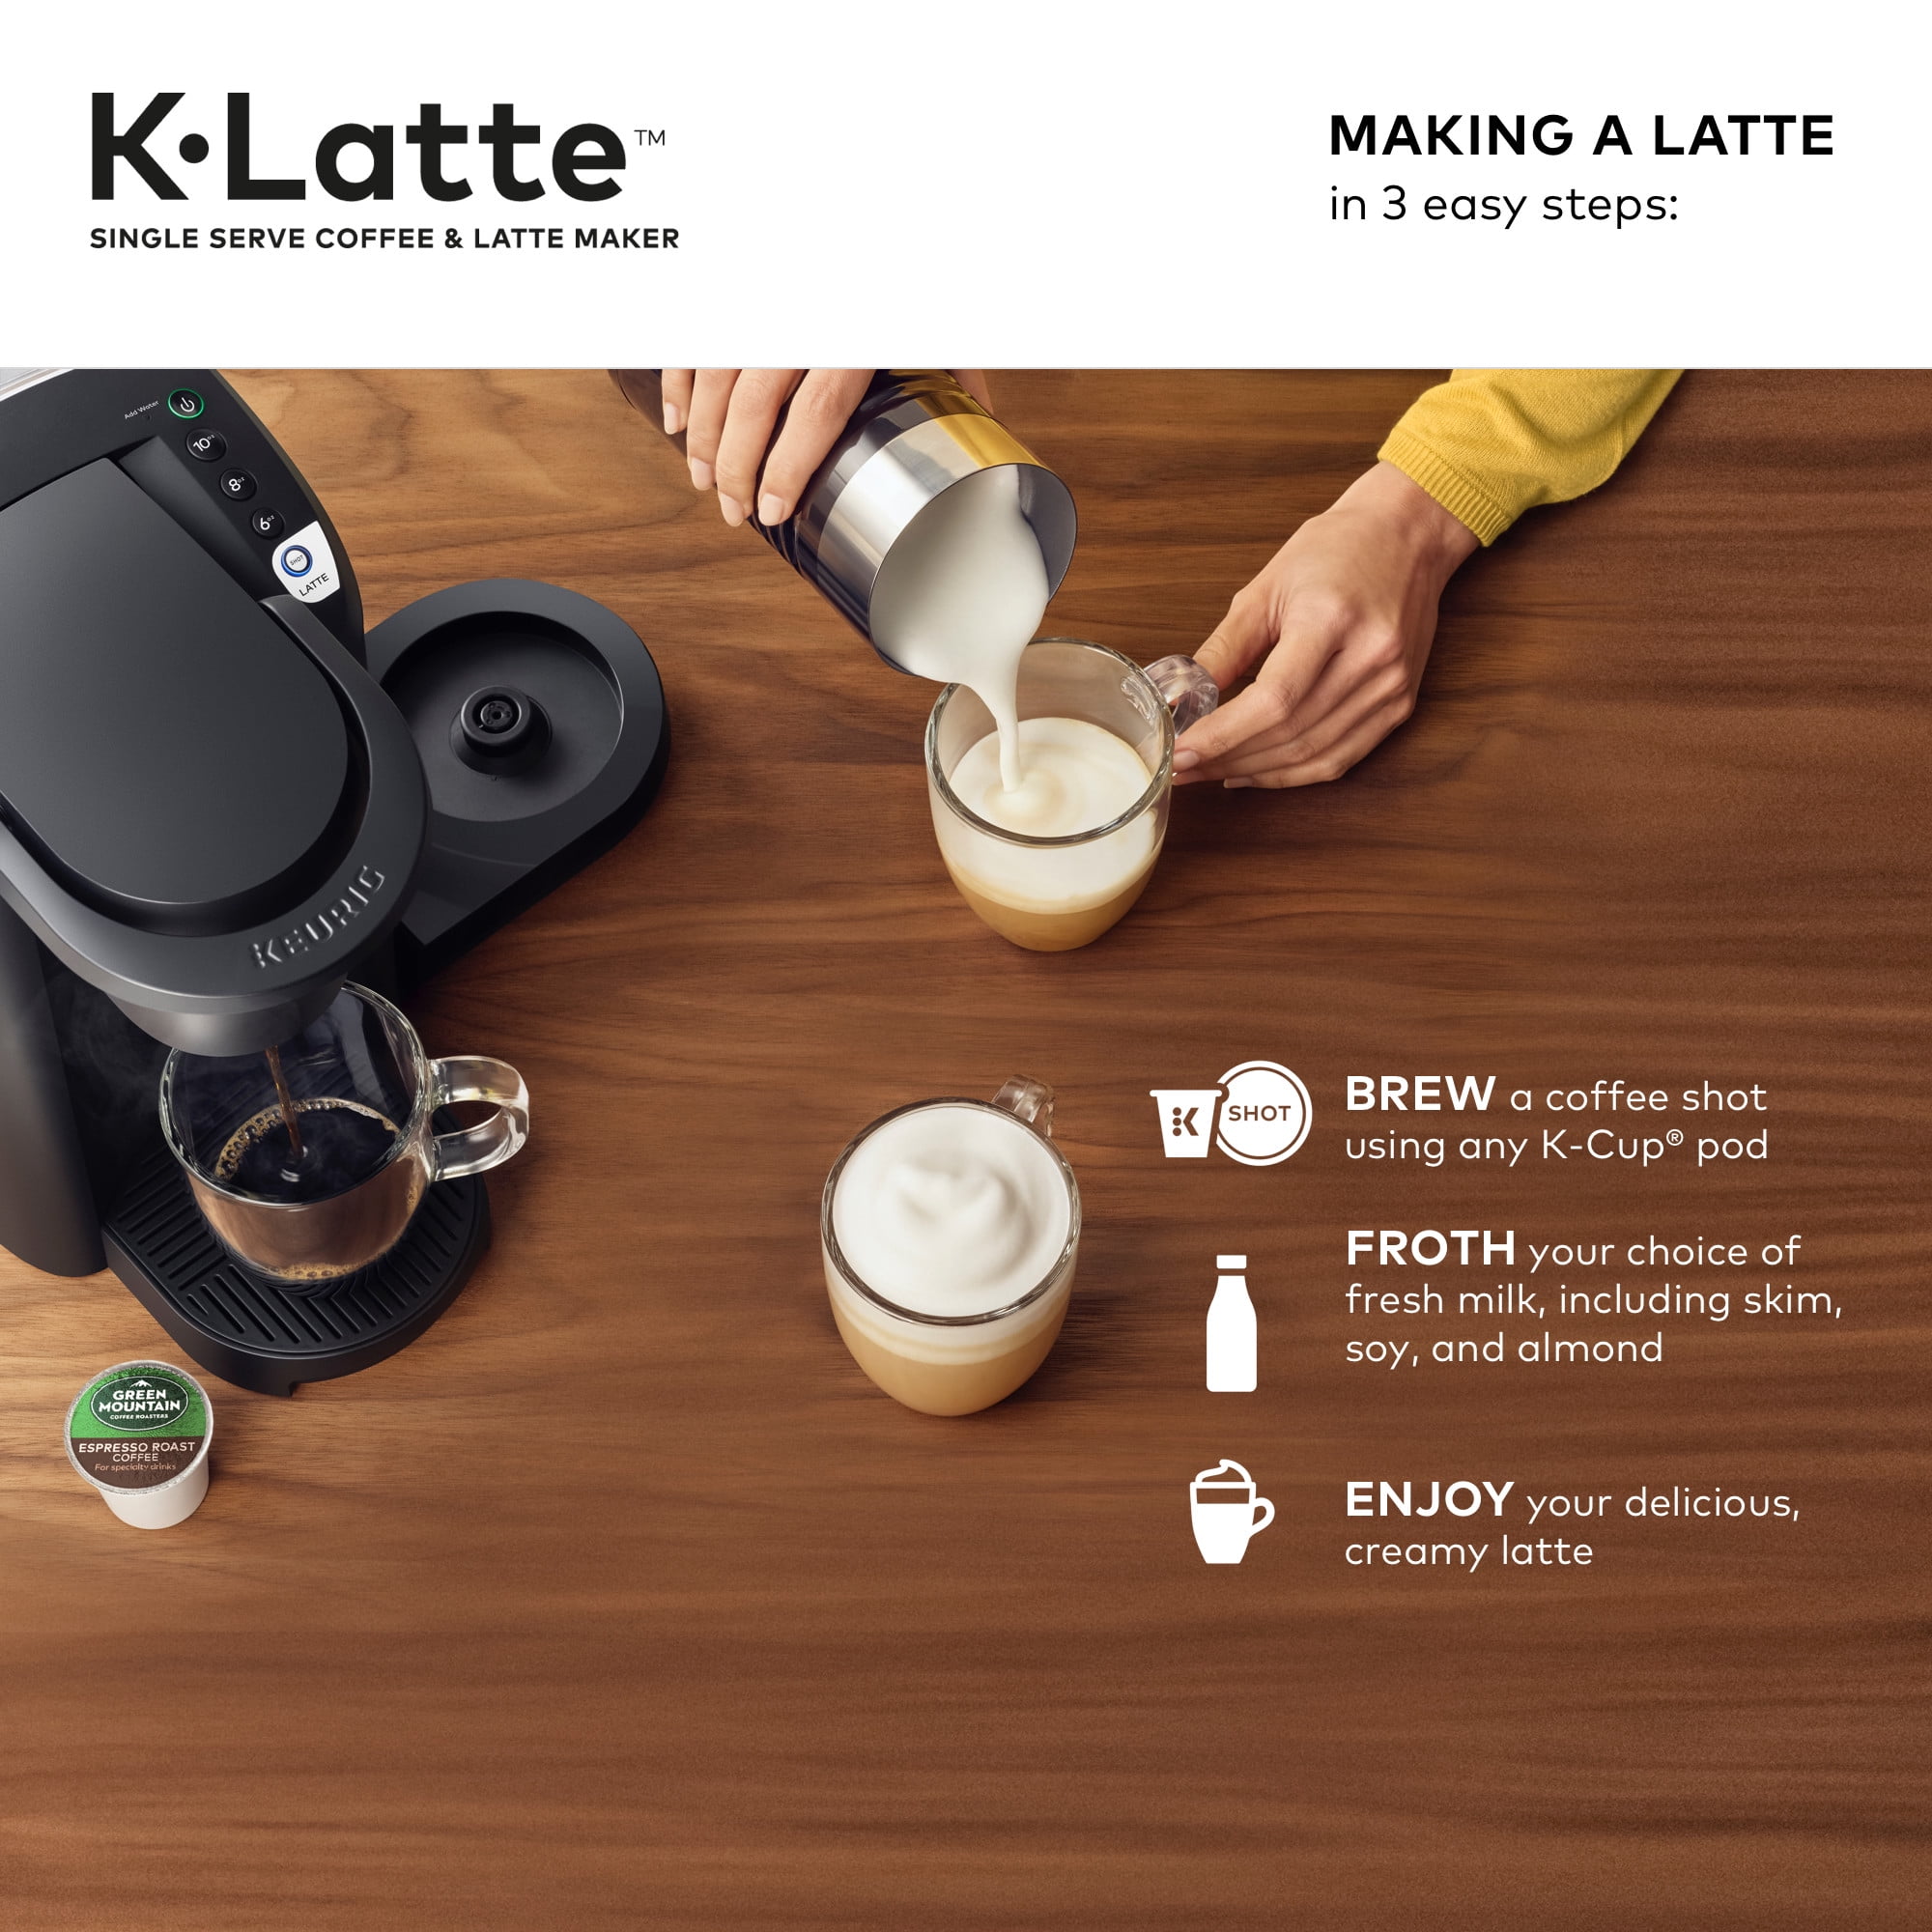 Keurig – K Latte Single Serve K-Cup Pod Coffee Maker $59.99 (Reg